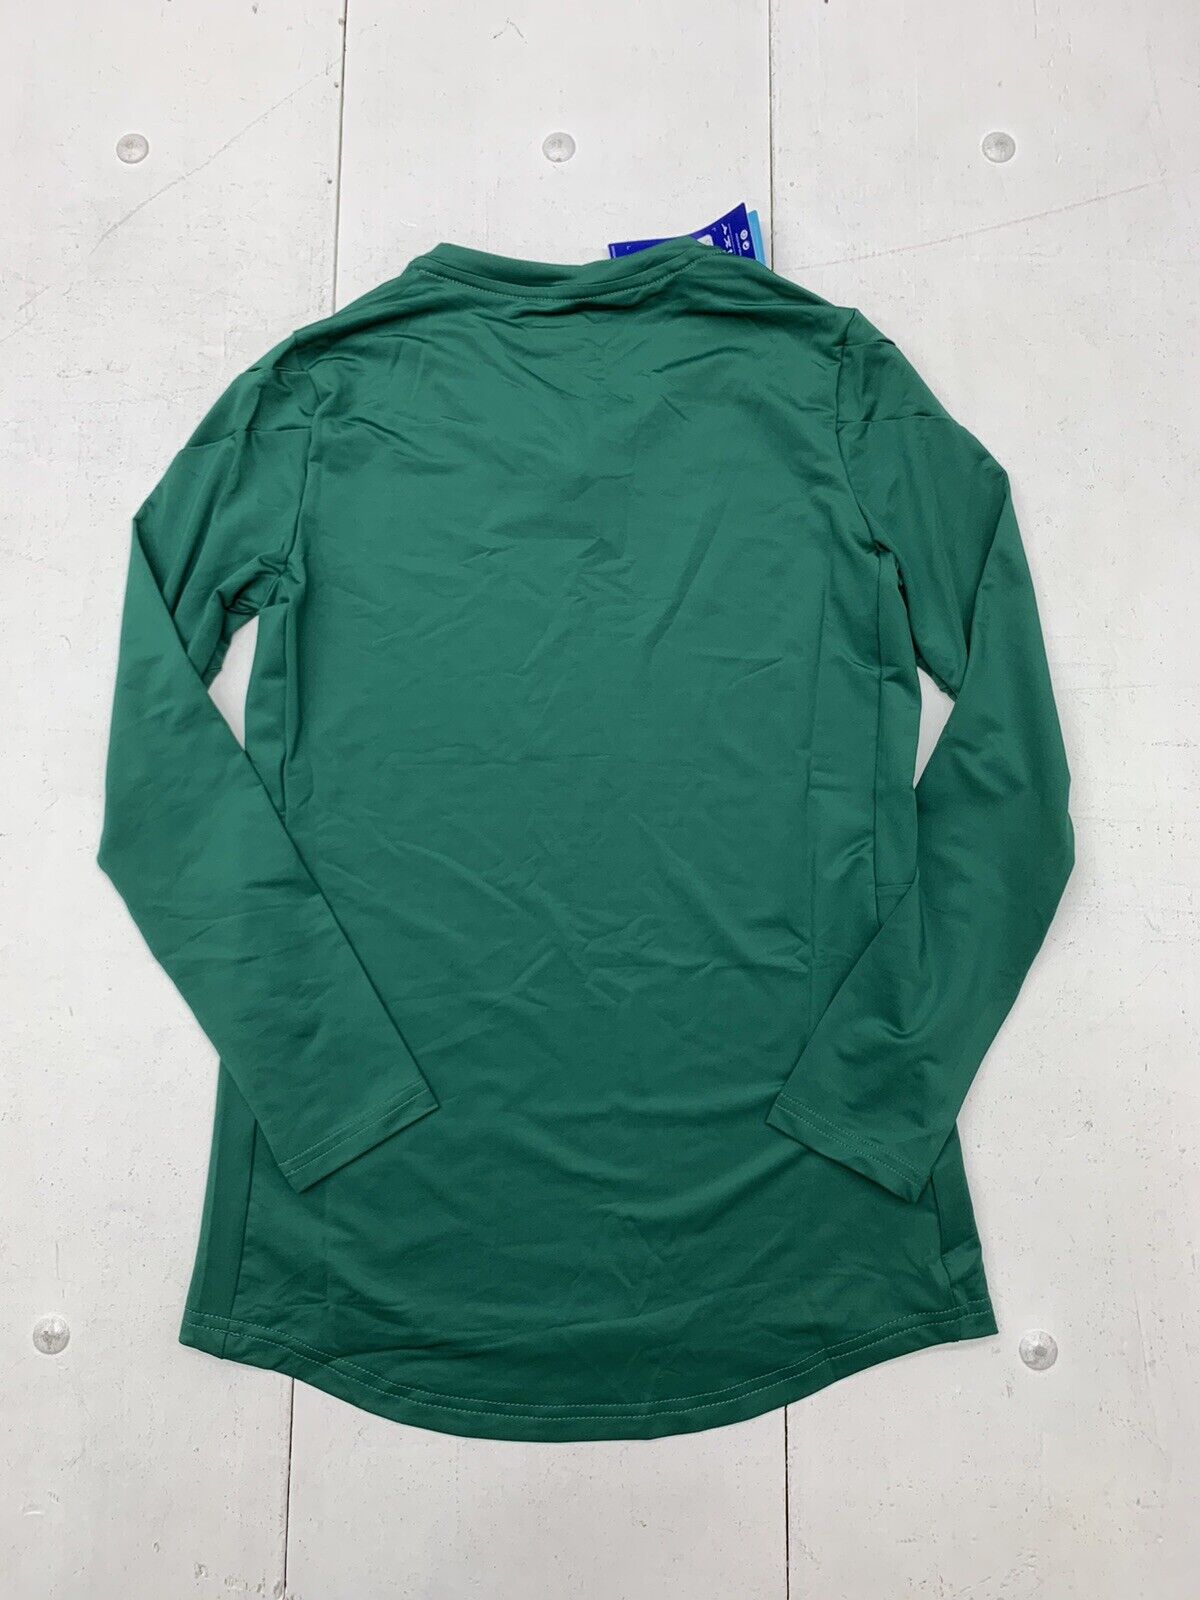 Mizuno Womens Green Long Sleeve Athletic Shirt Size Medium - beyond exchange